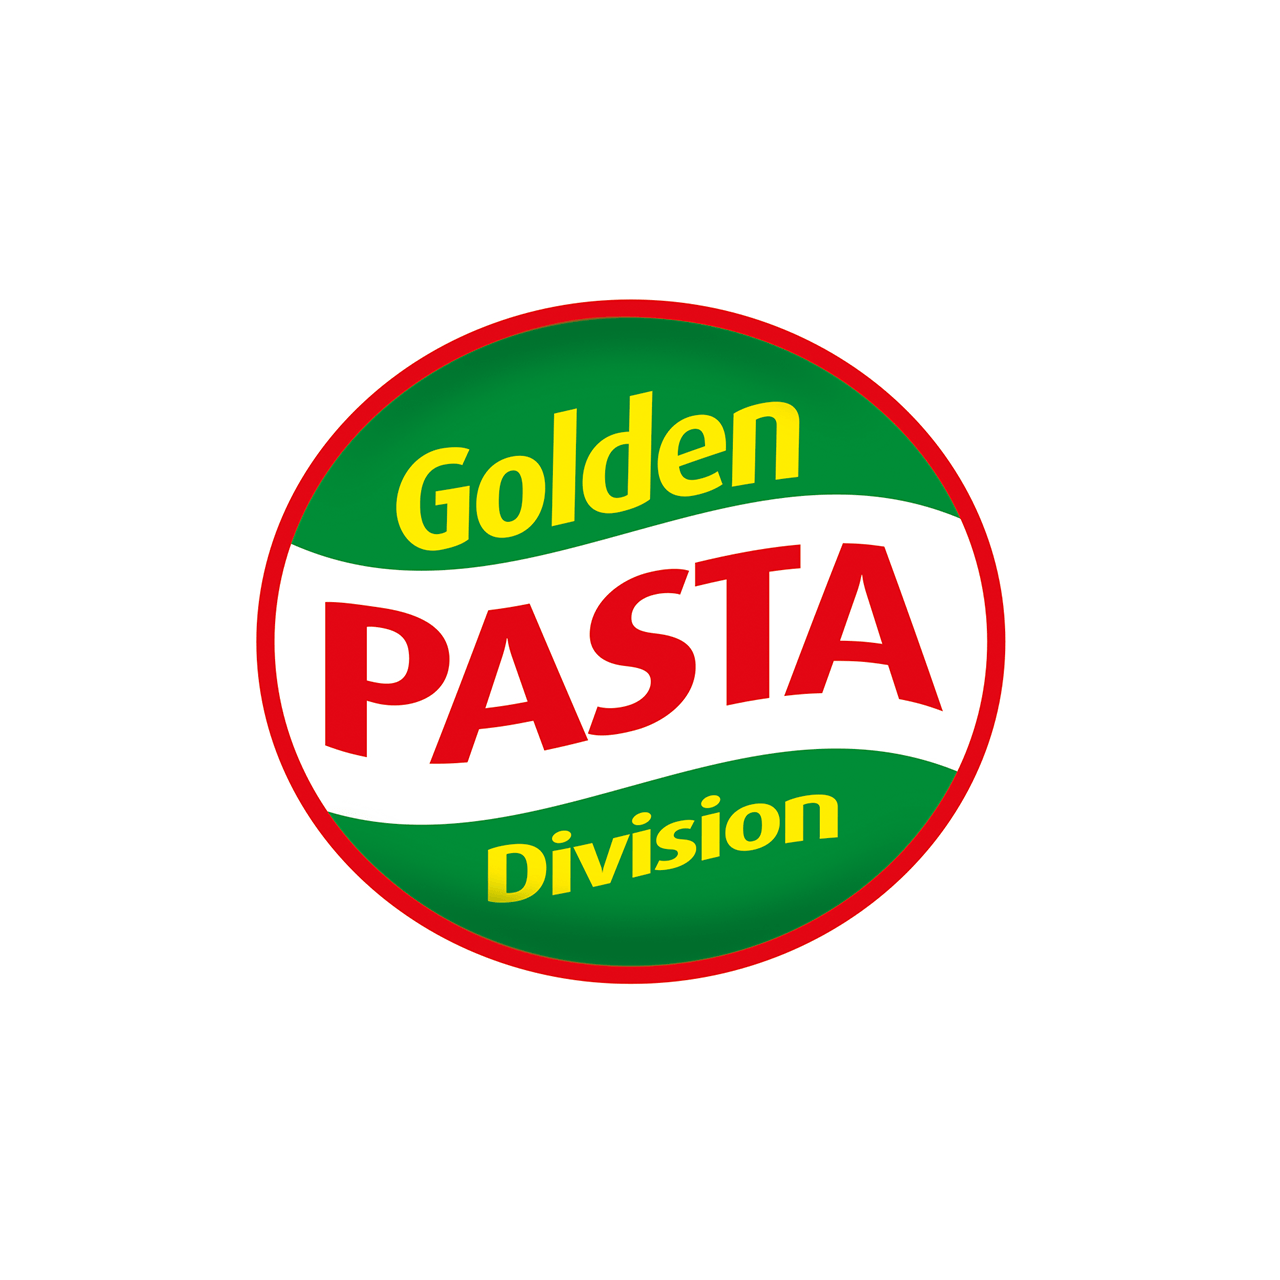 Golden Penny Logo - Golden Pasta Division | FMN